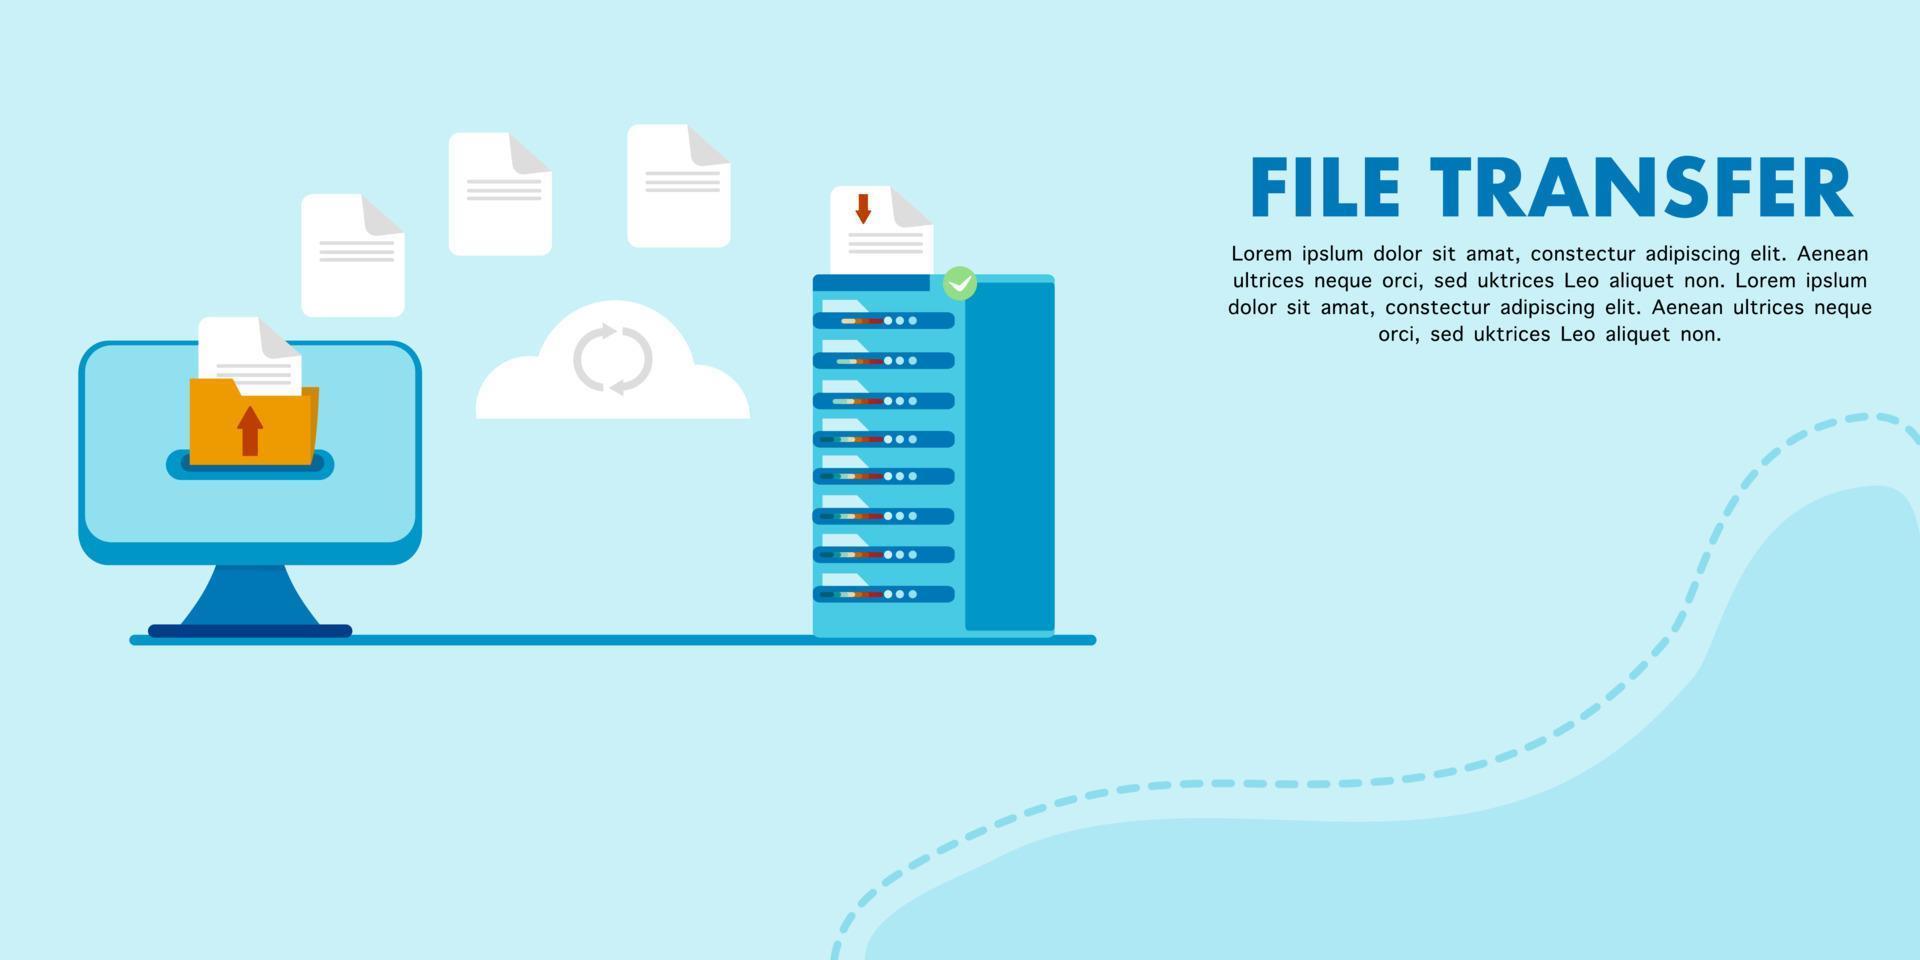 file or data transfer concept, data backup, document storage, technology cloud, file upload concept. vector